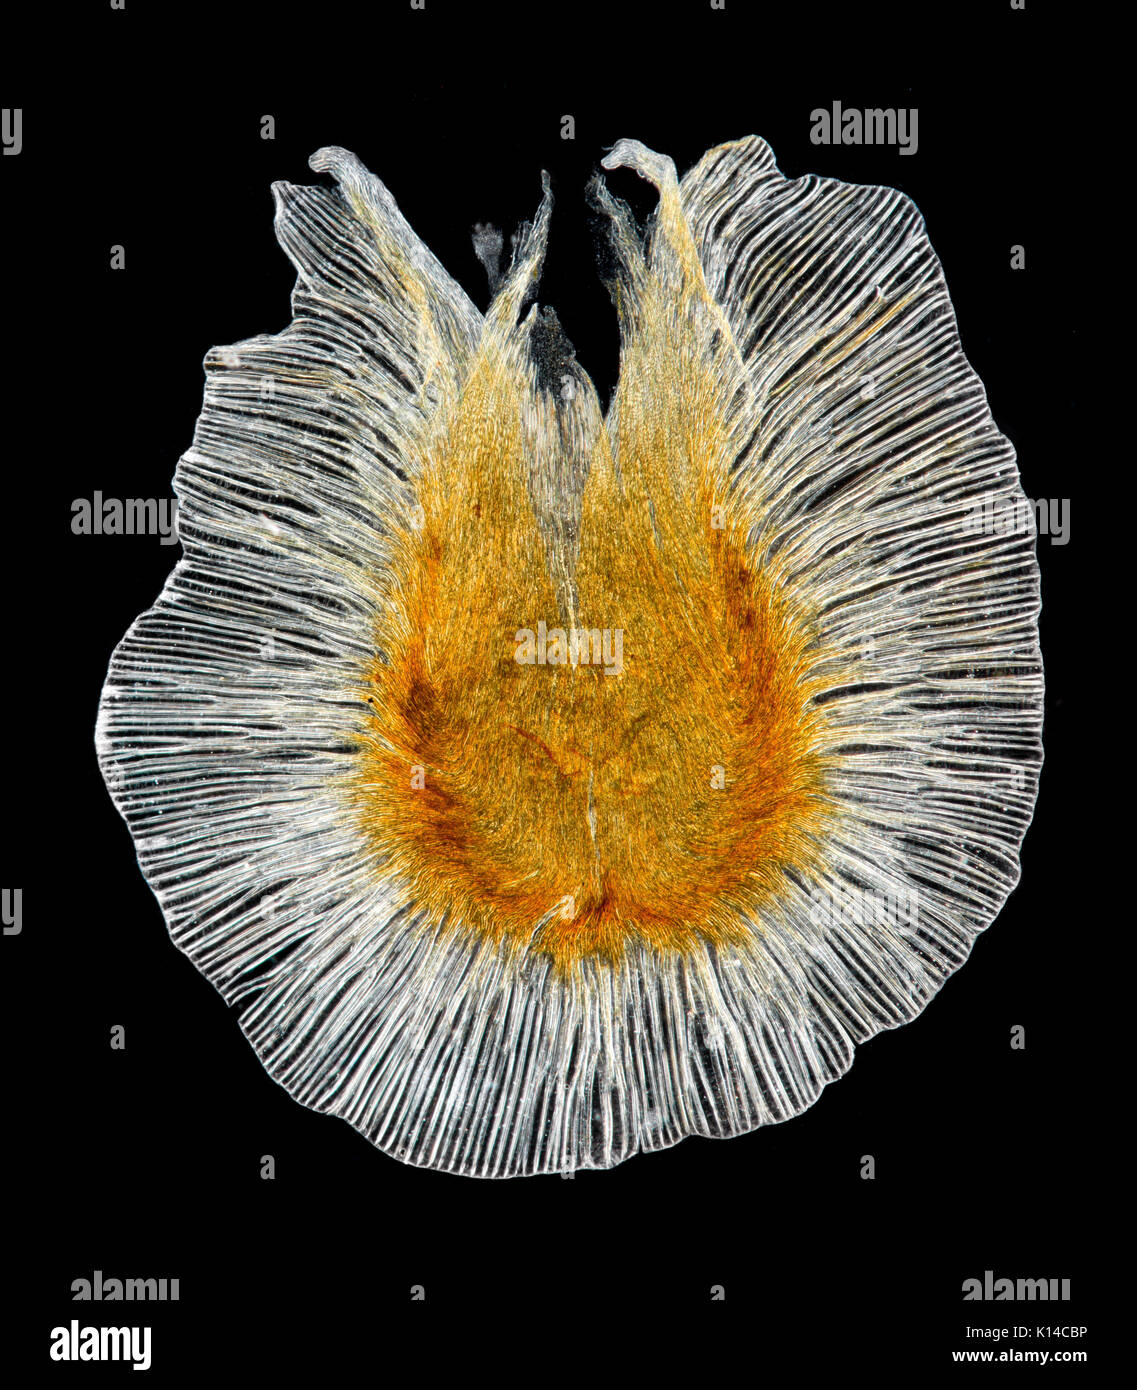 Eccremocarpus scaber Saatgut, der Chilenischen Herrlichkeit - Blume oder Chilenischen Herrlichkeit Kriechgang, Dunkelfeld photomicrograph Stockfoto